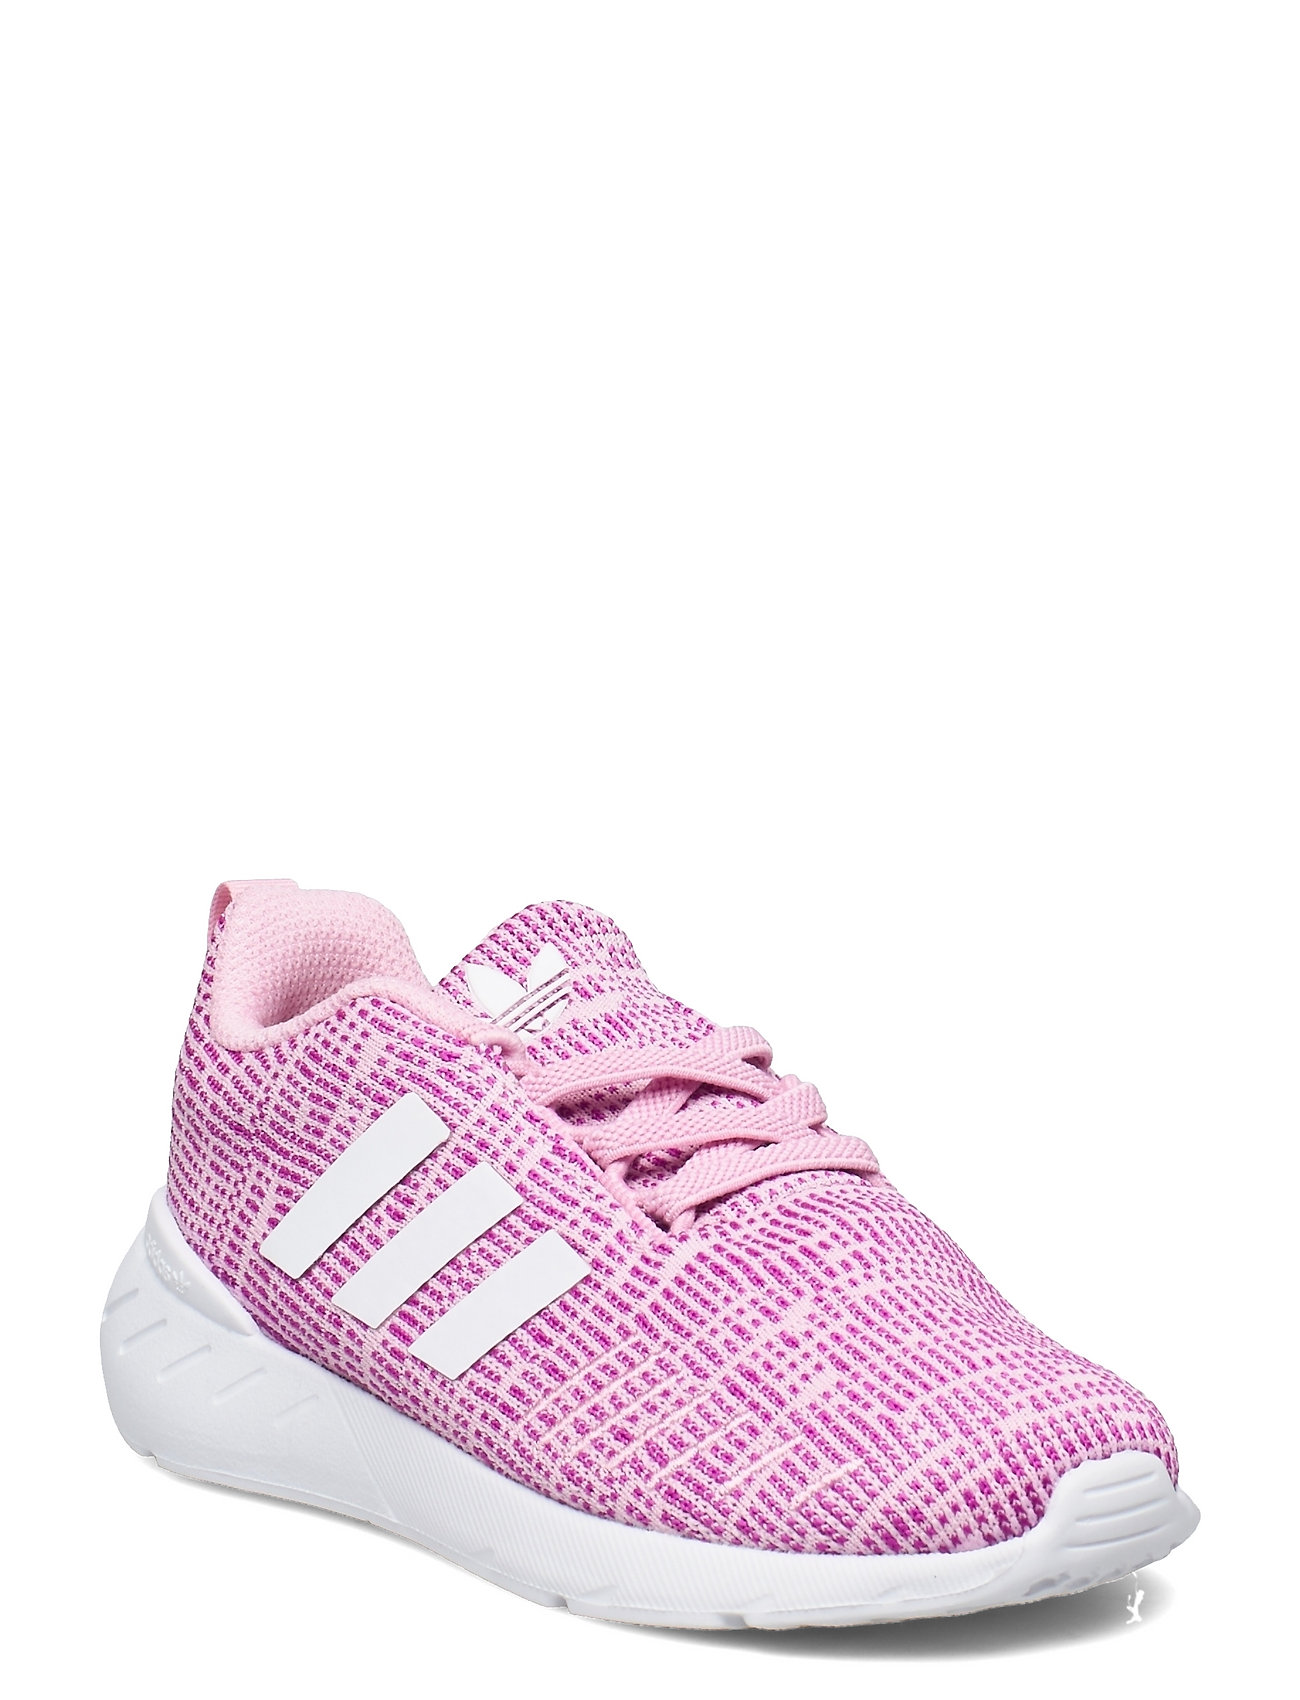 "adidas Originals" "Swift Run 22 Shoes Low-top Sneakers Pink Adidas